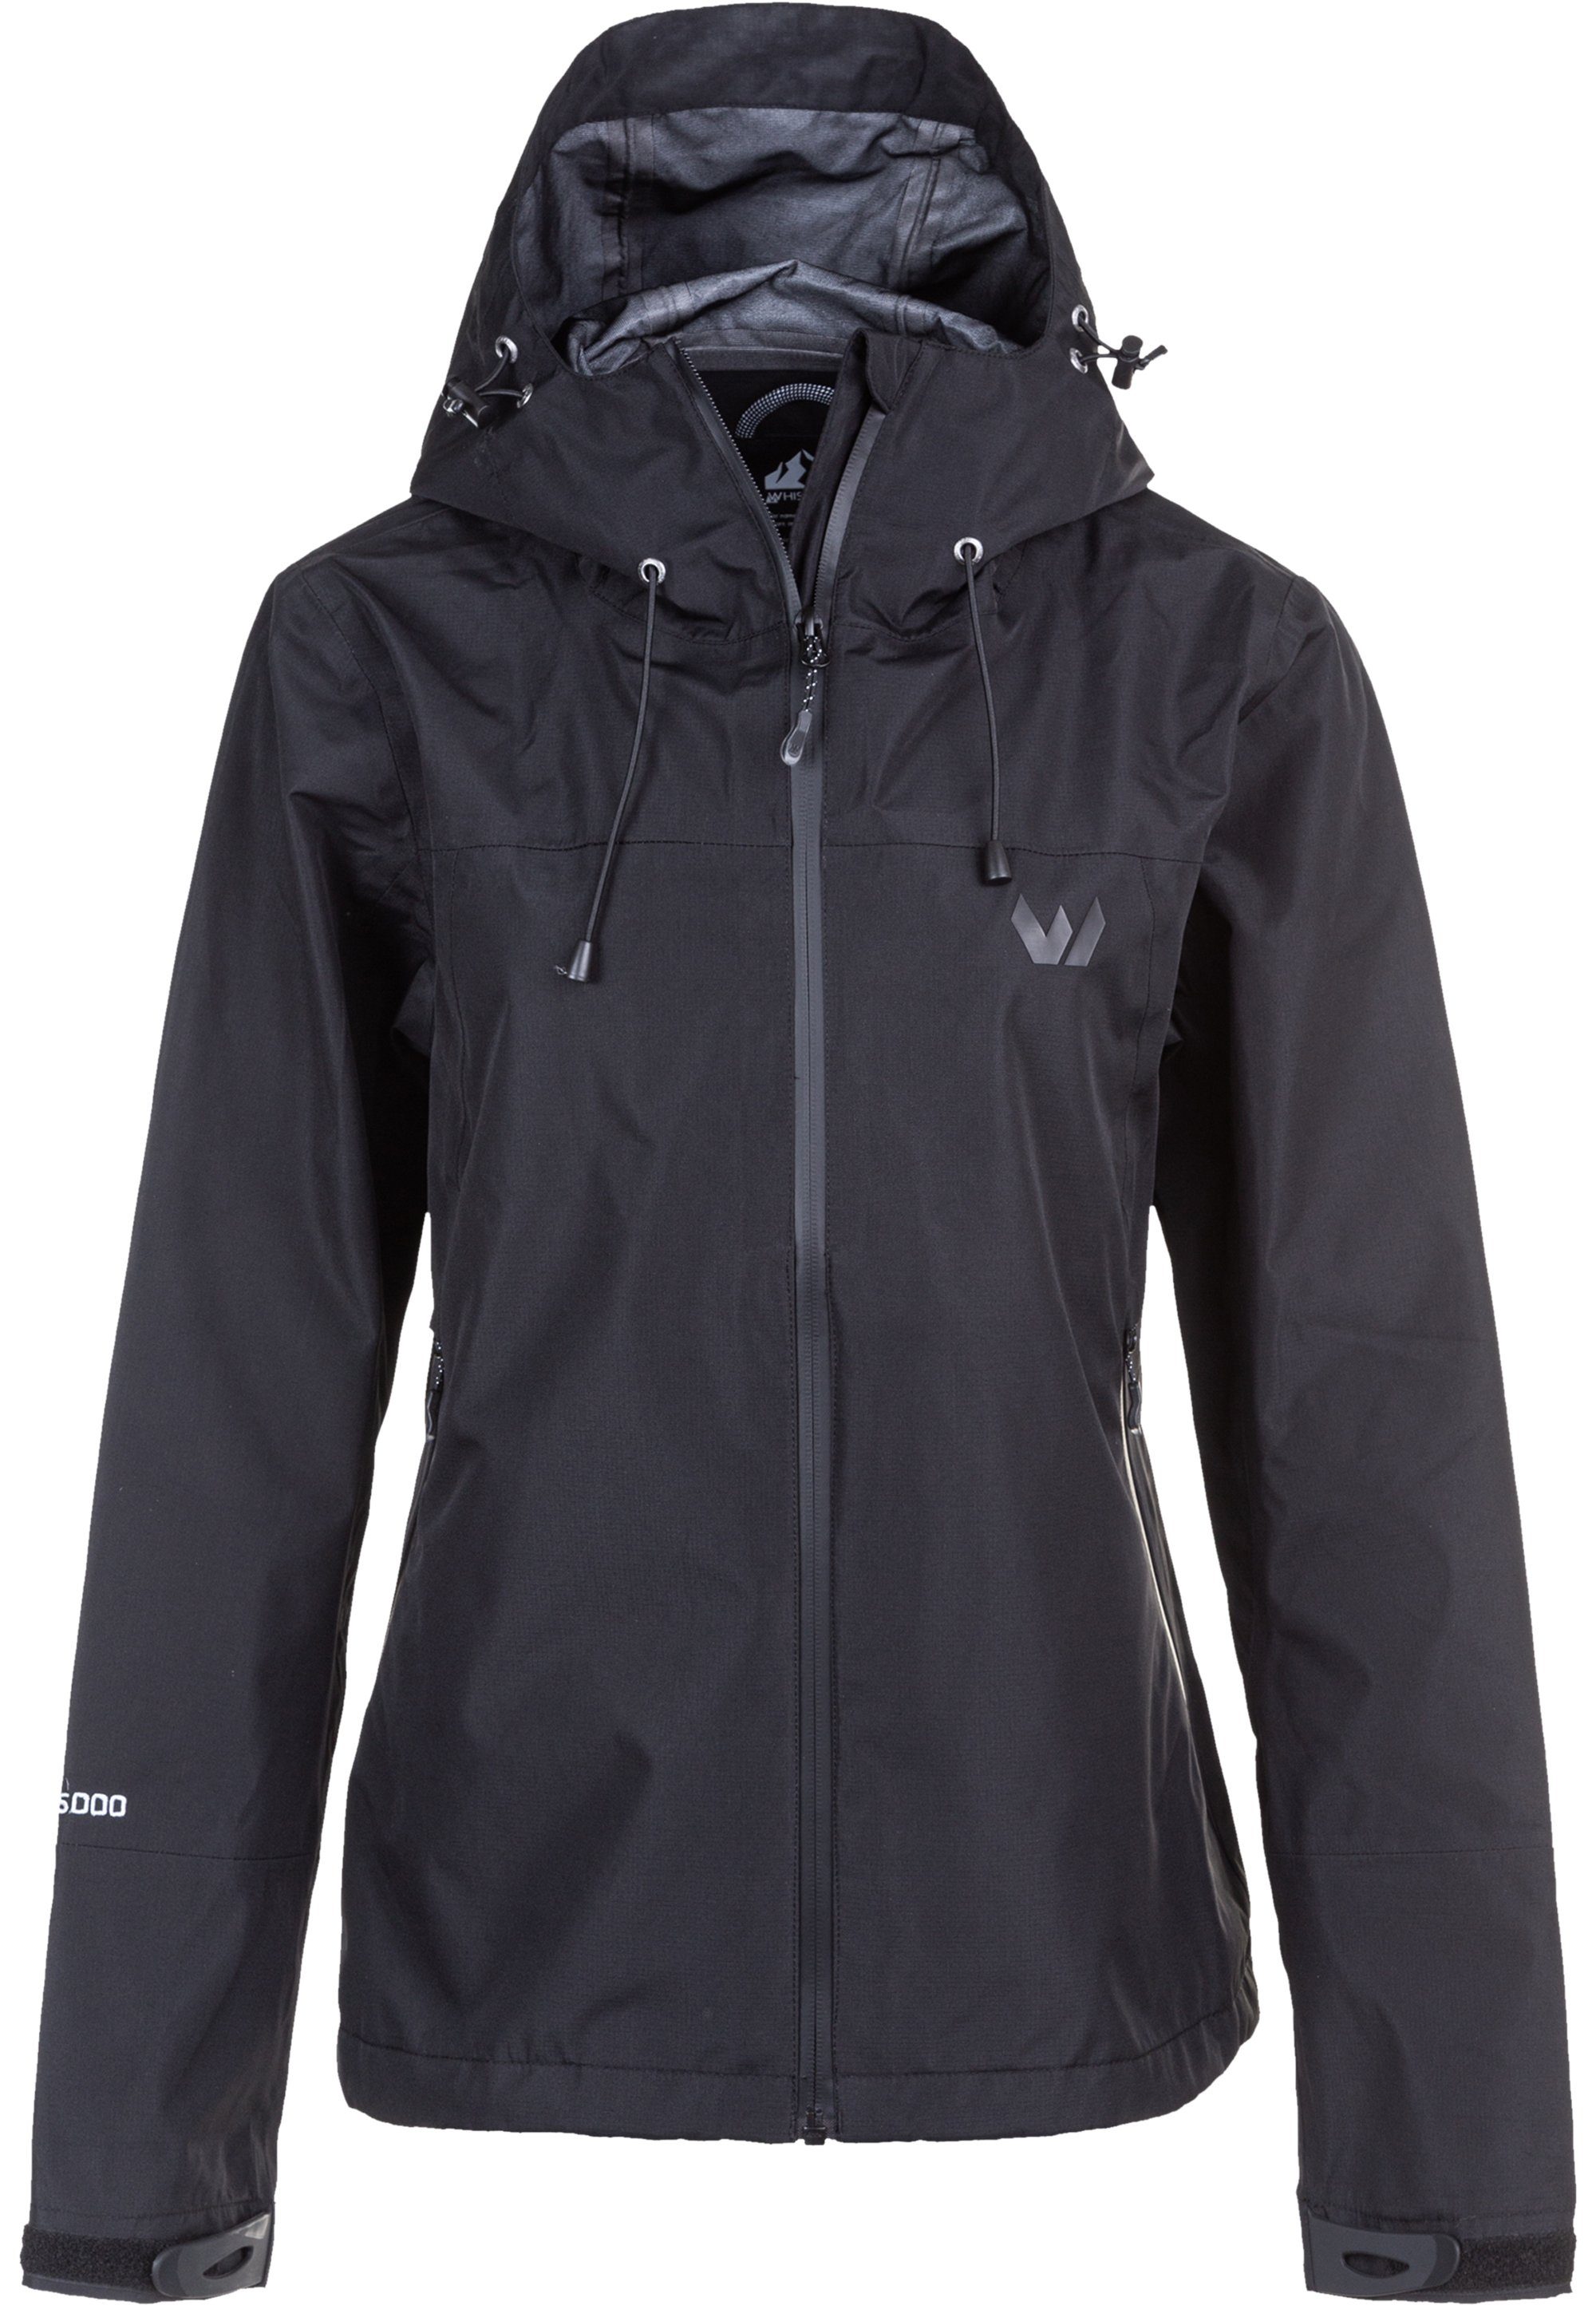 WHISTLER Softshelljacke BROOK W mit W-PRO Shell praktischer Kapuze 15000 Jacket schwarz